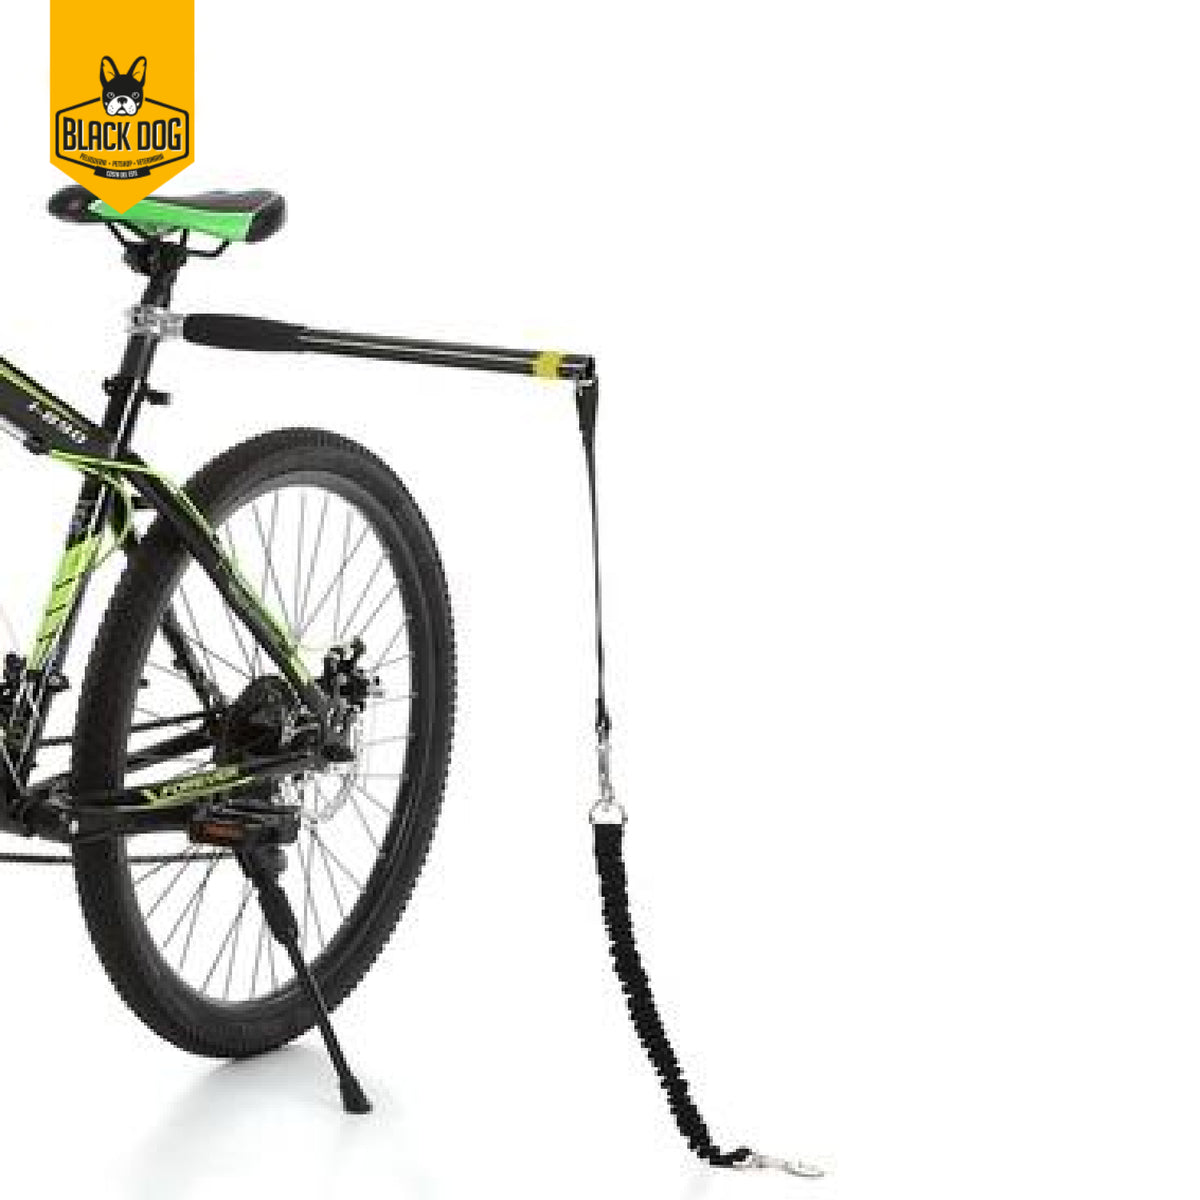 PAWISE | Biker Set | Adaptador con Correa para Bicicleta - BlackDogPanama